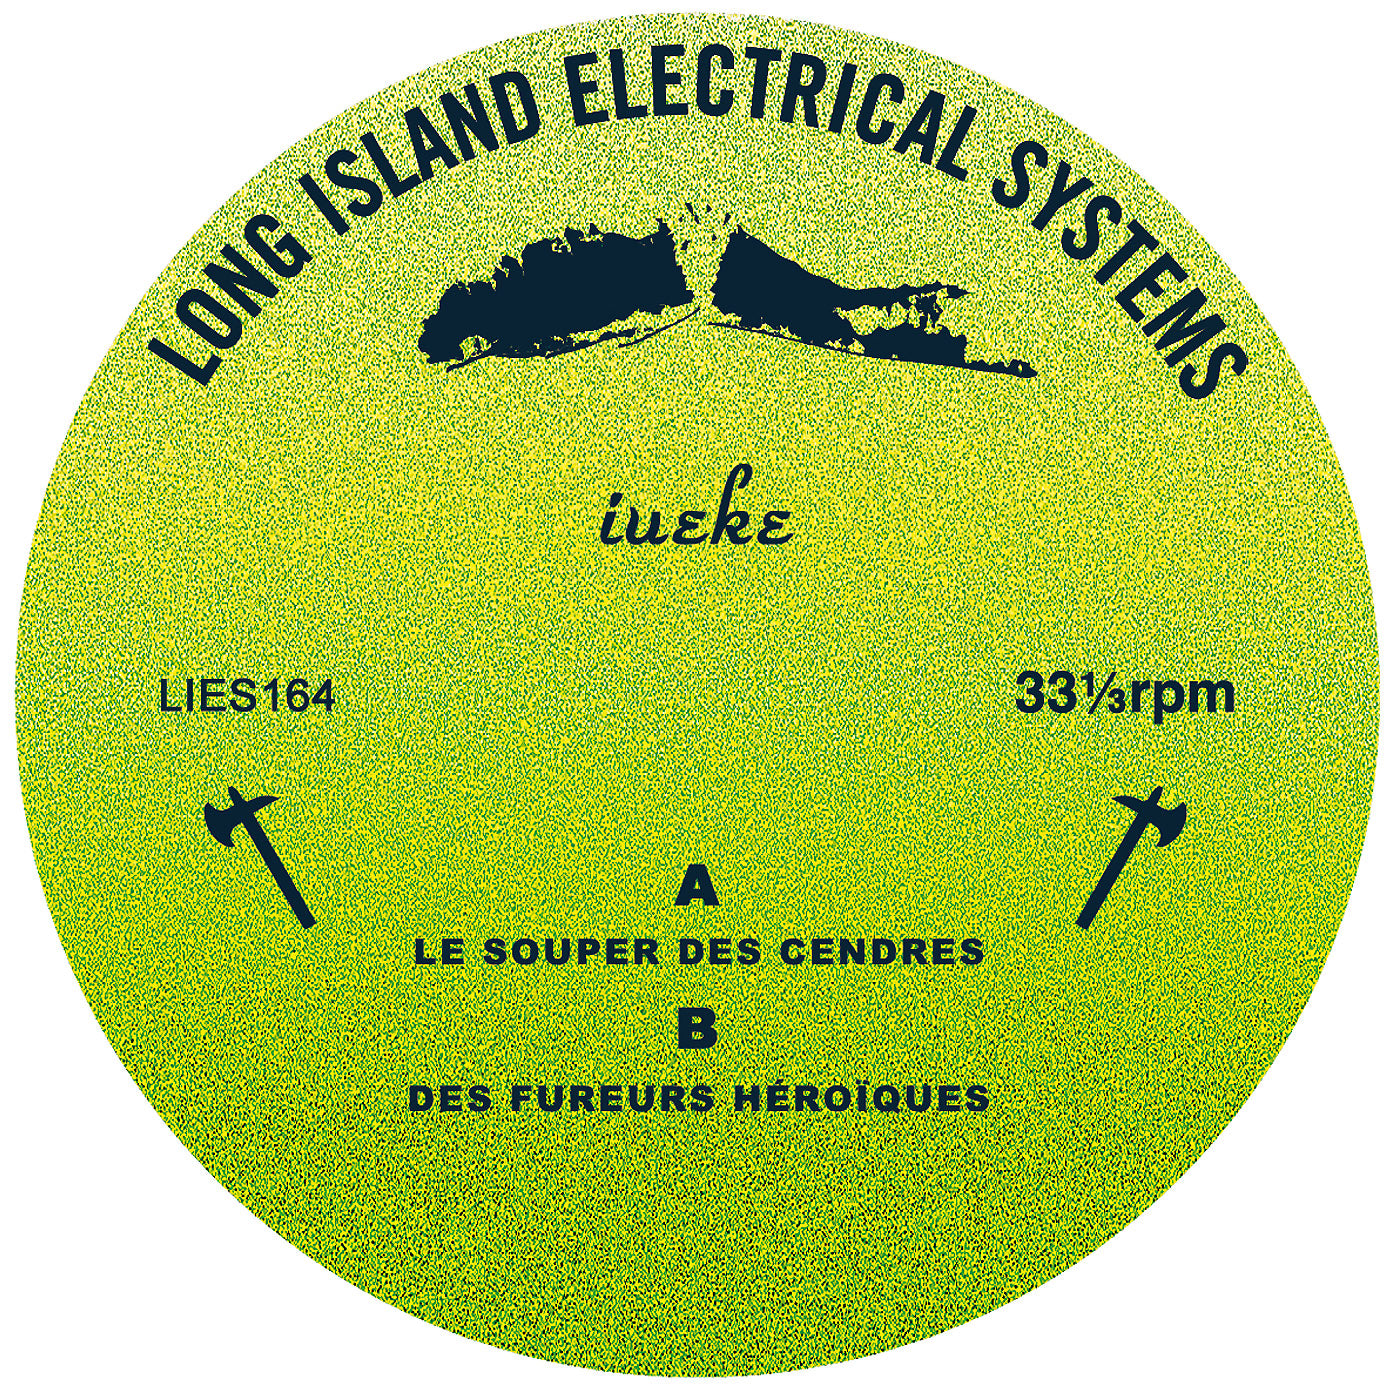 Iueke - s/t - 12" - LIES-164